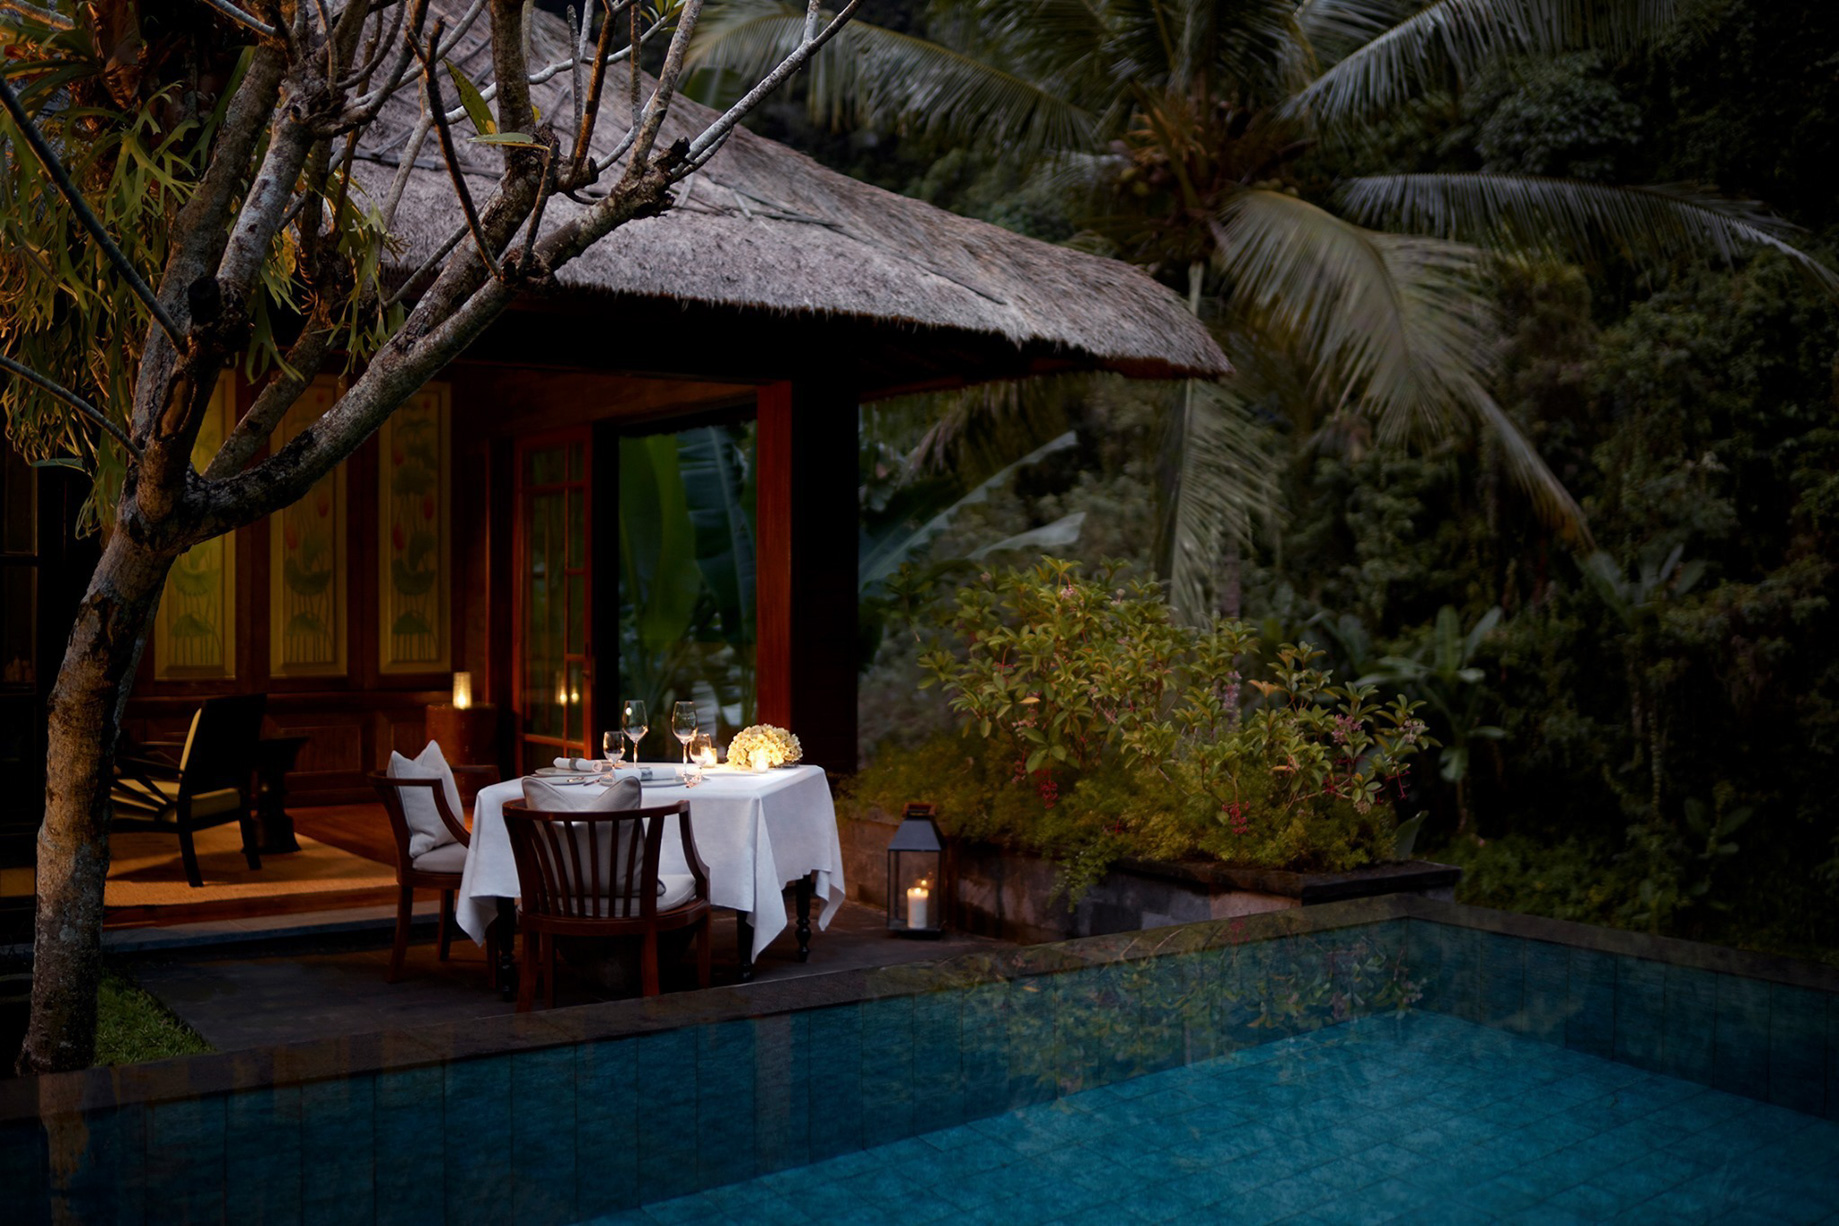 The Ritz-Carlton, Mandapa Reserve Resort - Ubud, Bali, Indonesia - Private Dining